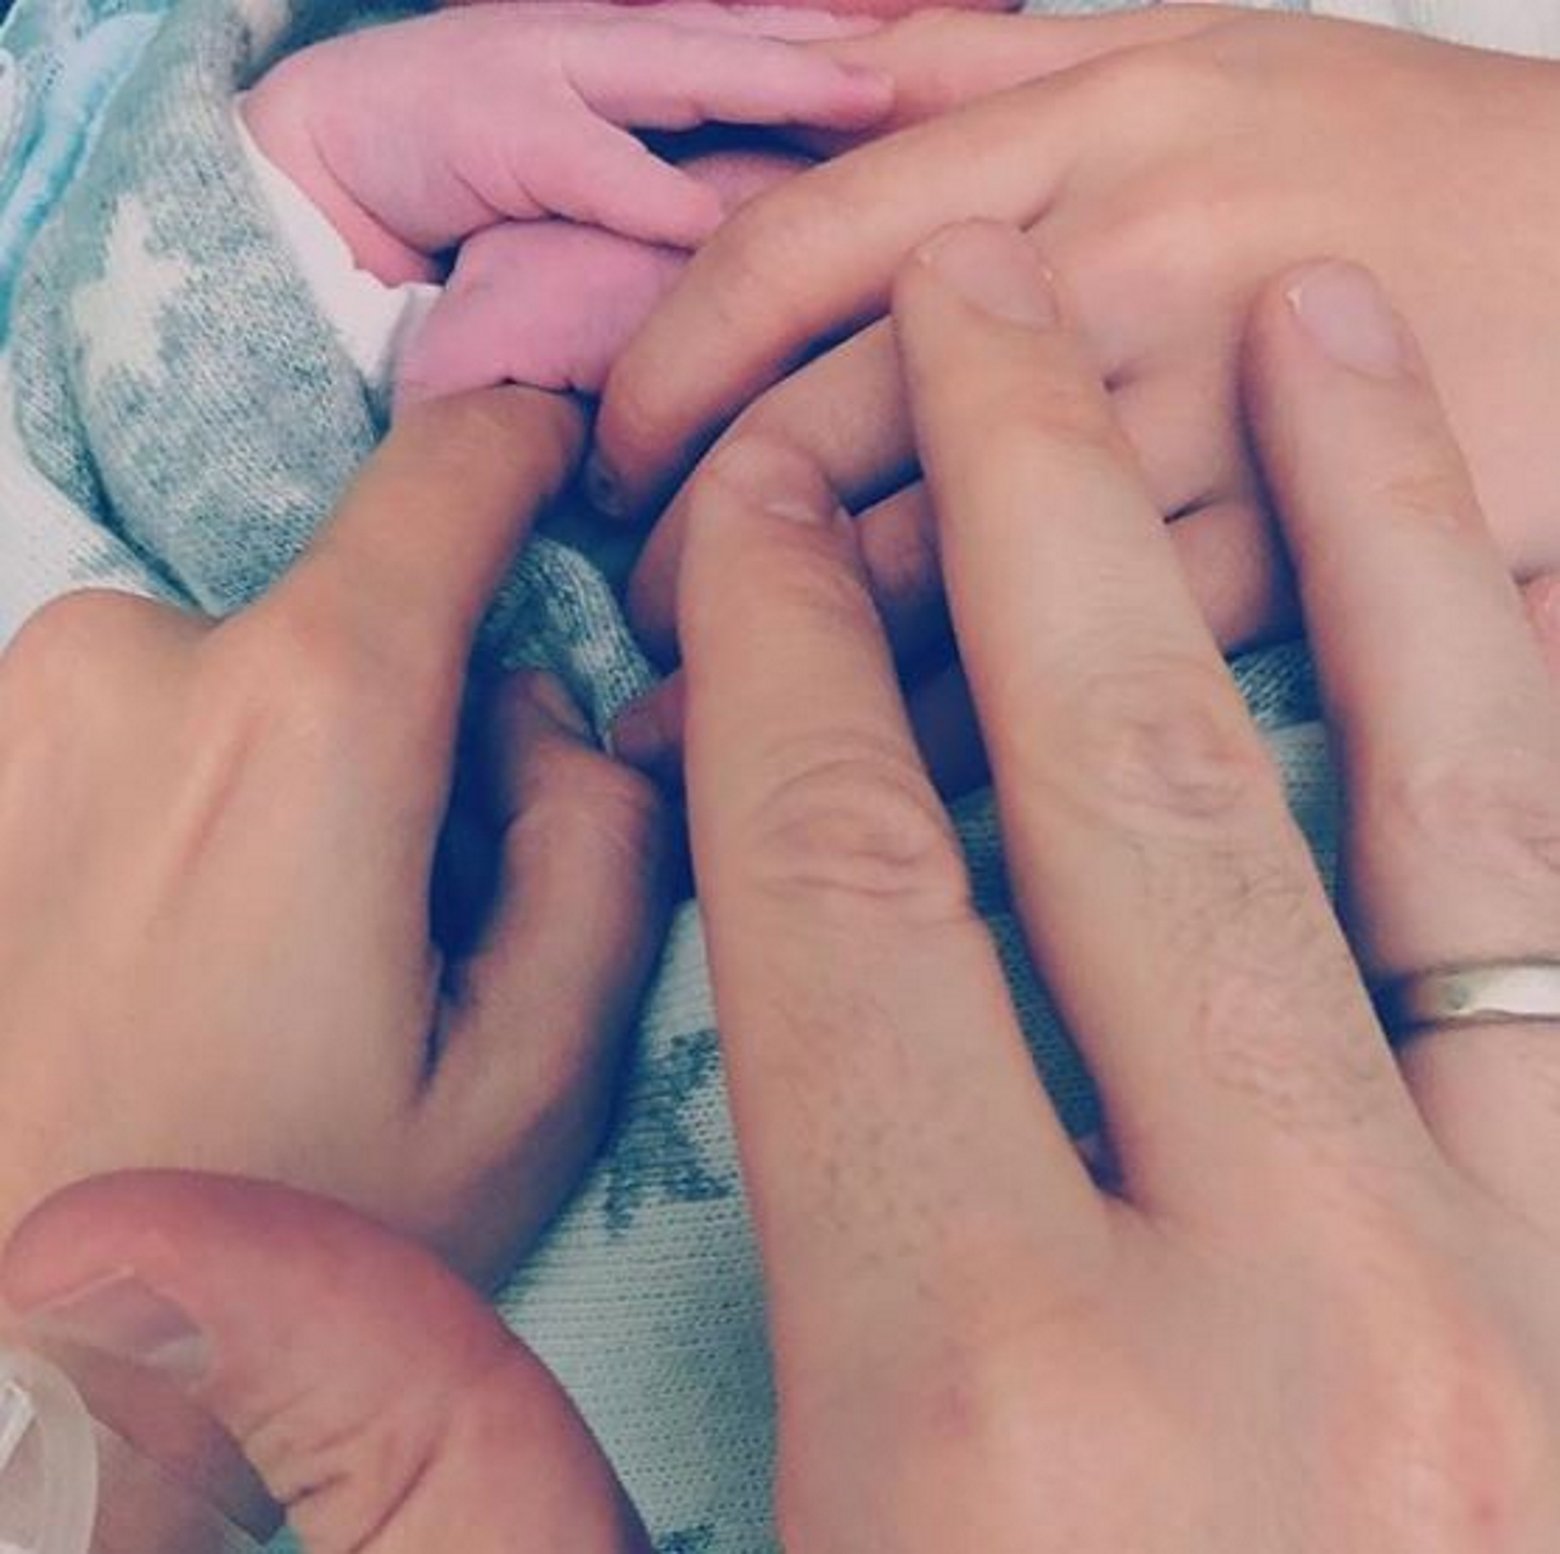 Rosanna Zanetti i David Bisbal donen la benvinguda al seu nou fill, Matteo